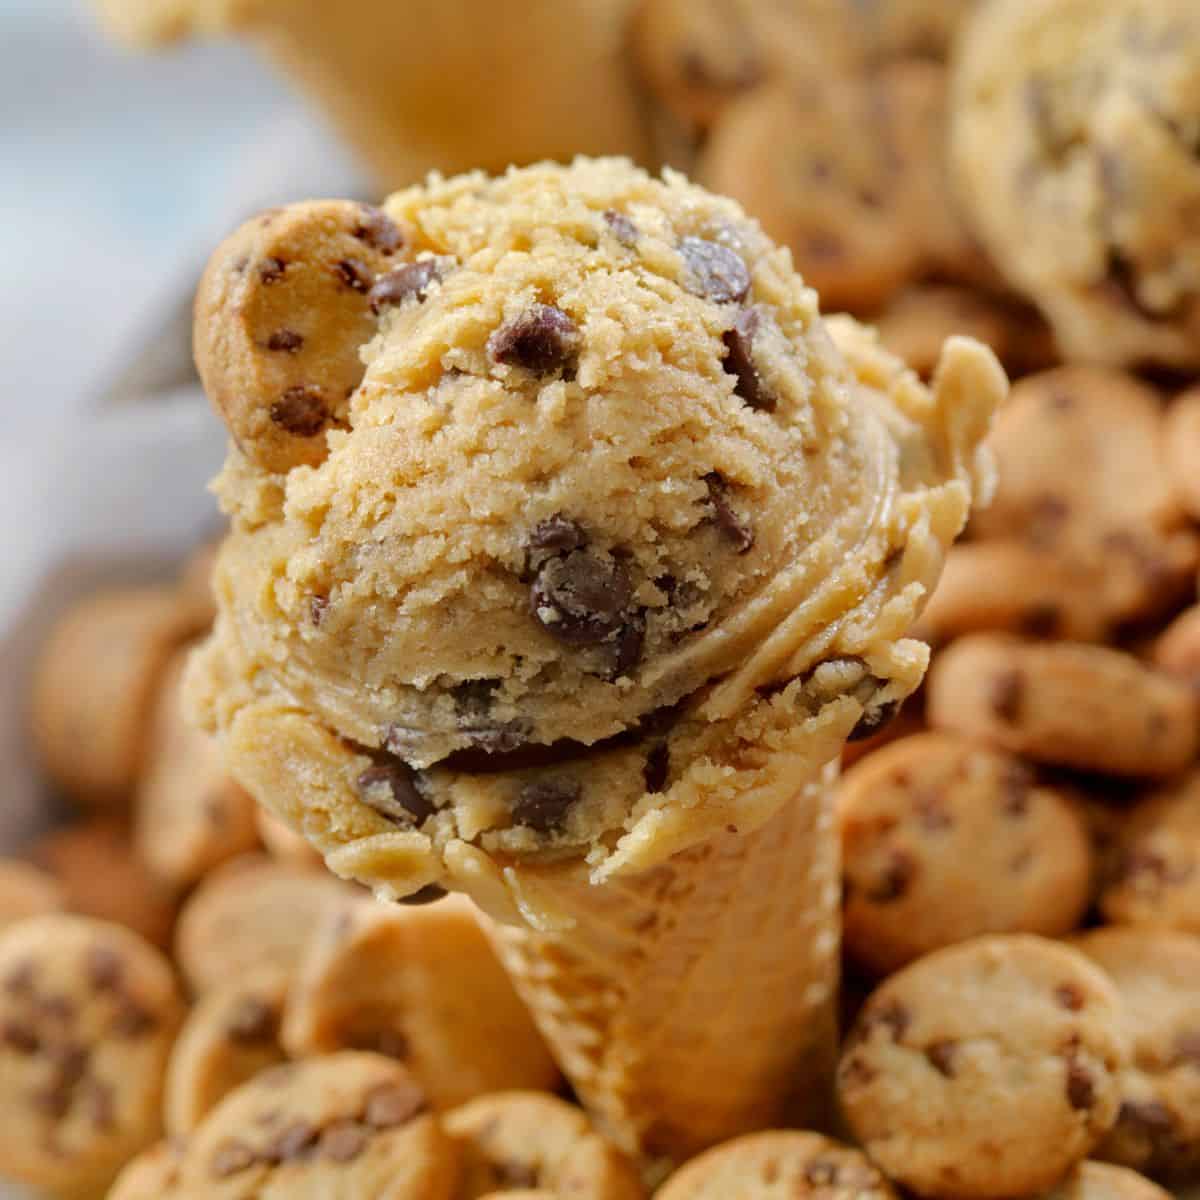 TasteGreatFoodie - Top 10 Blender Ice Cream Recipes - Desserts